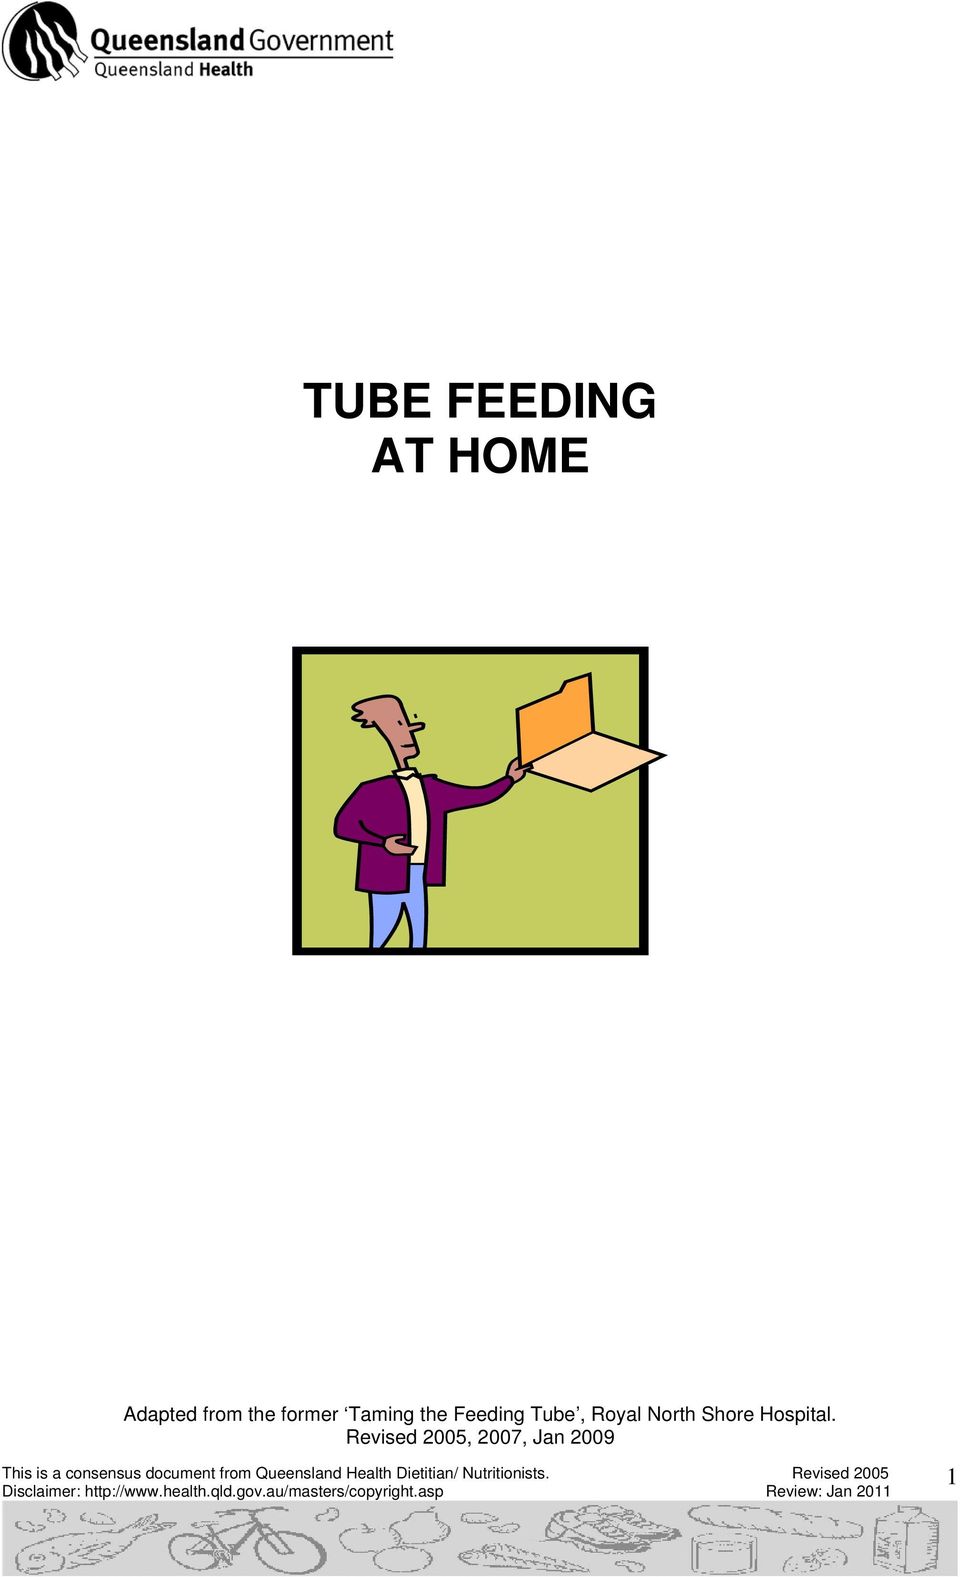 Feeding Tube, Royal North Shore